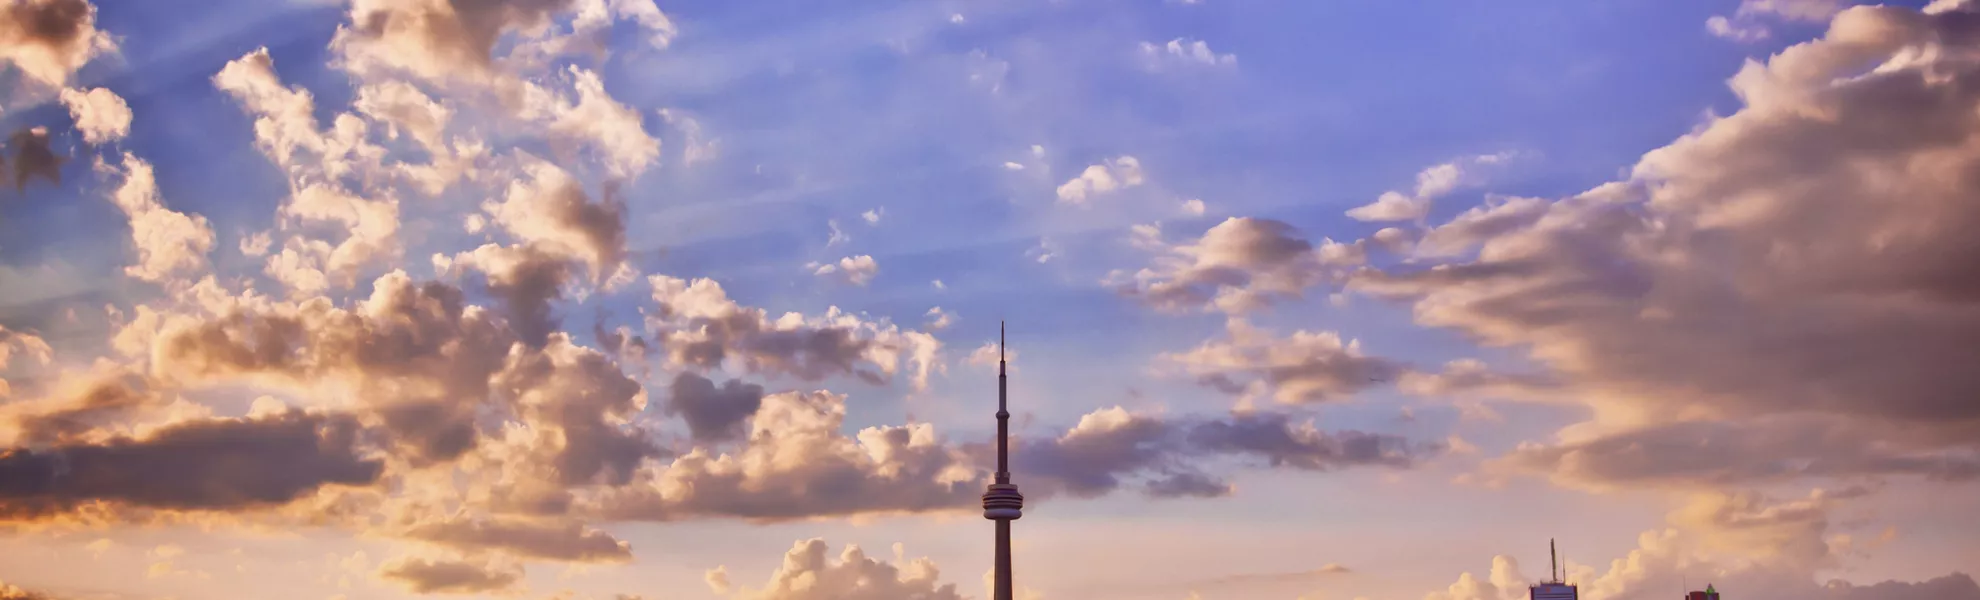 Toronto - © Copyright: Aqnus Febriyant